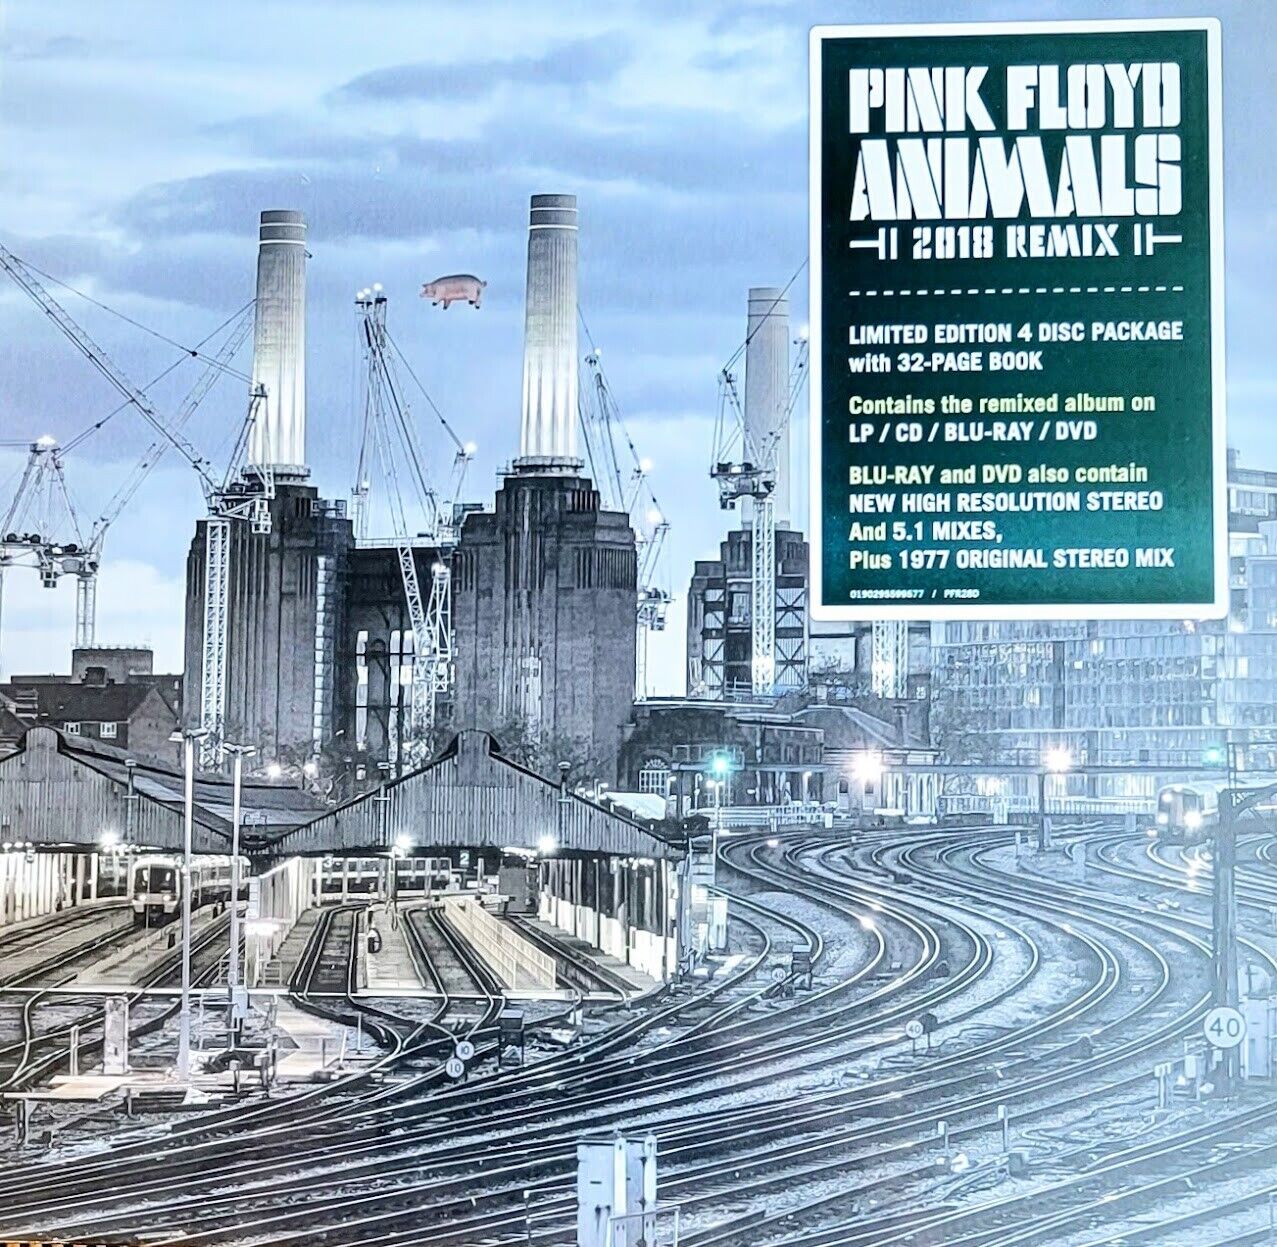 PINK FLOYD ANIMALS 2018 REMIX - LP, CD, BLU-RAY, DVD BOXED SET " NEW, SEALED "